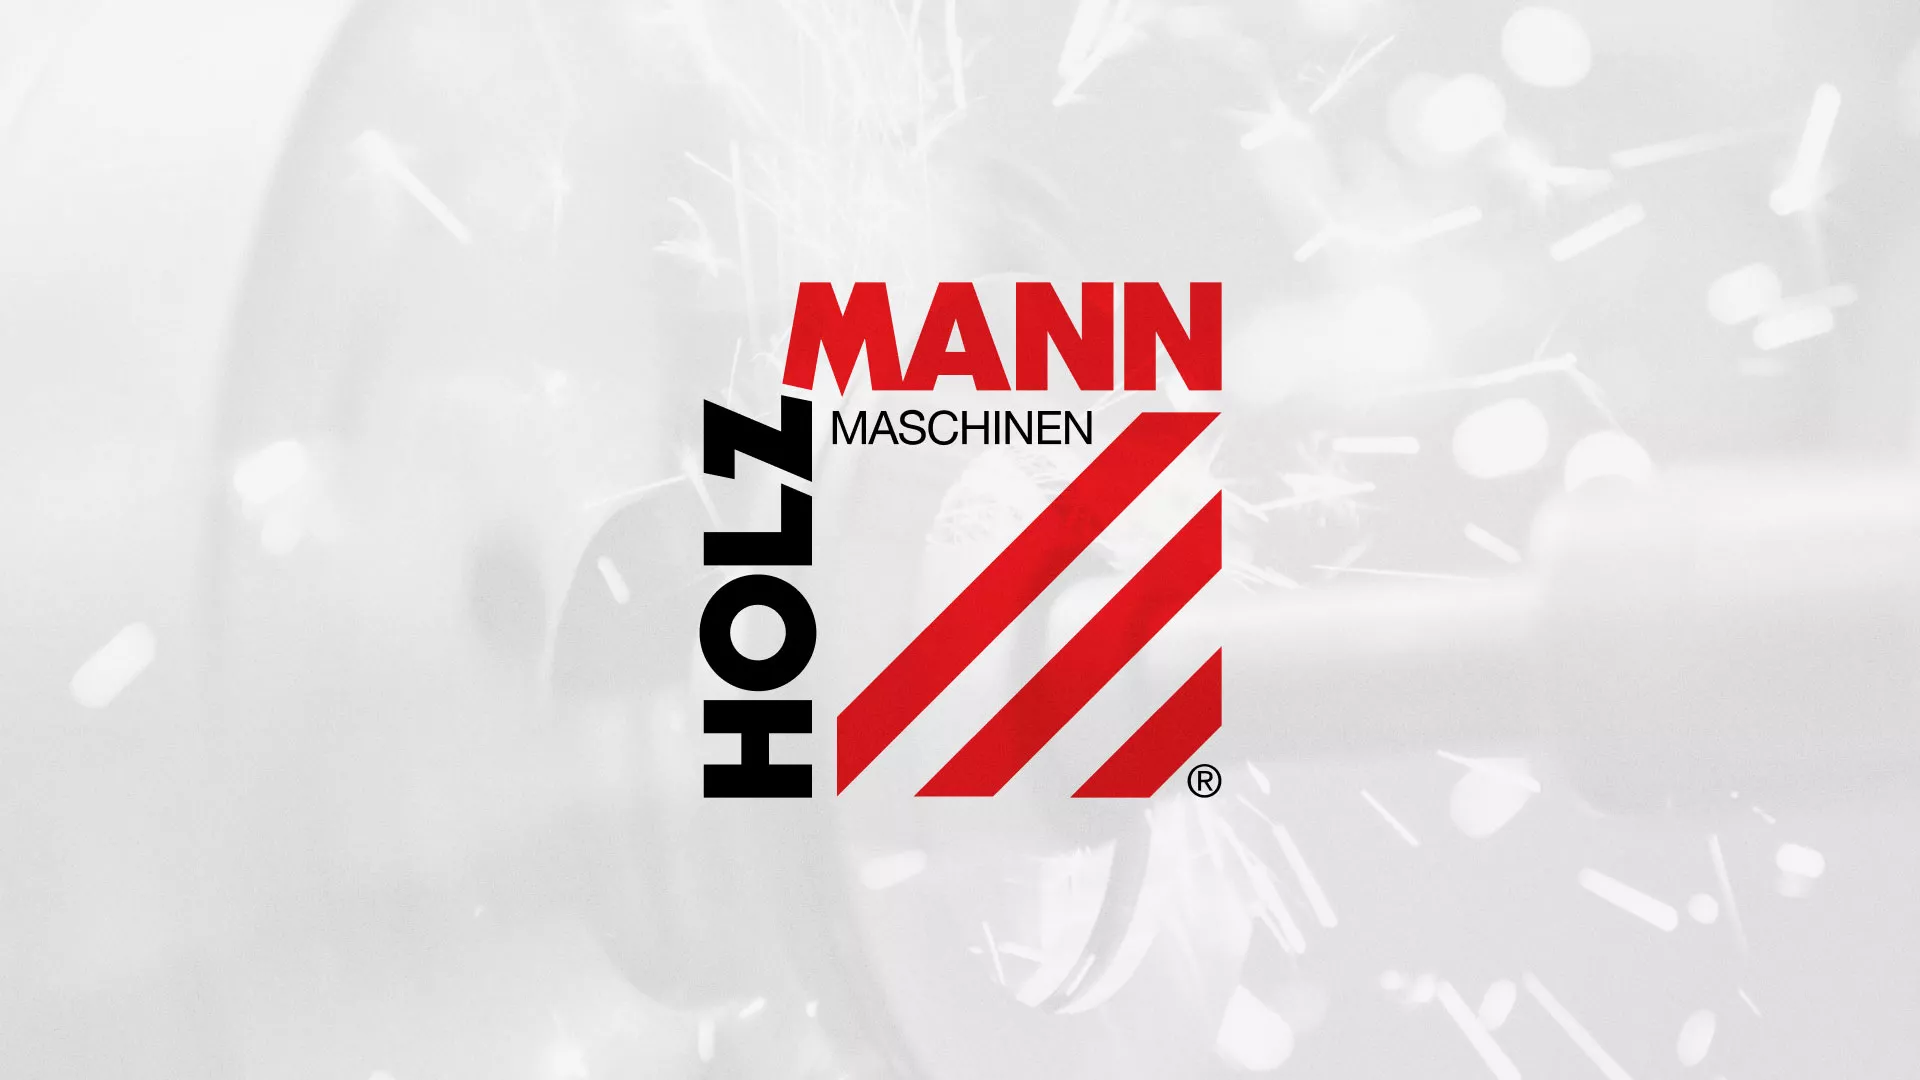 Создание сайта компании «HOLZMANN Maschinen GmbH» в Мурманске